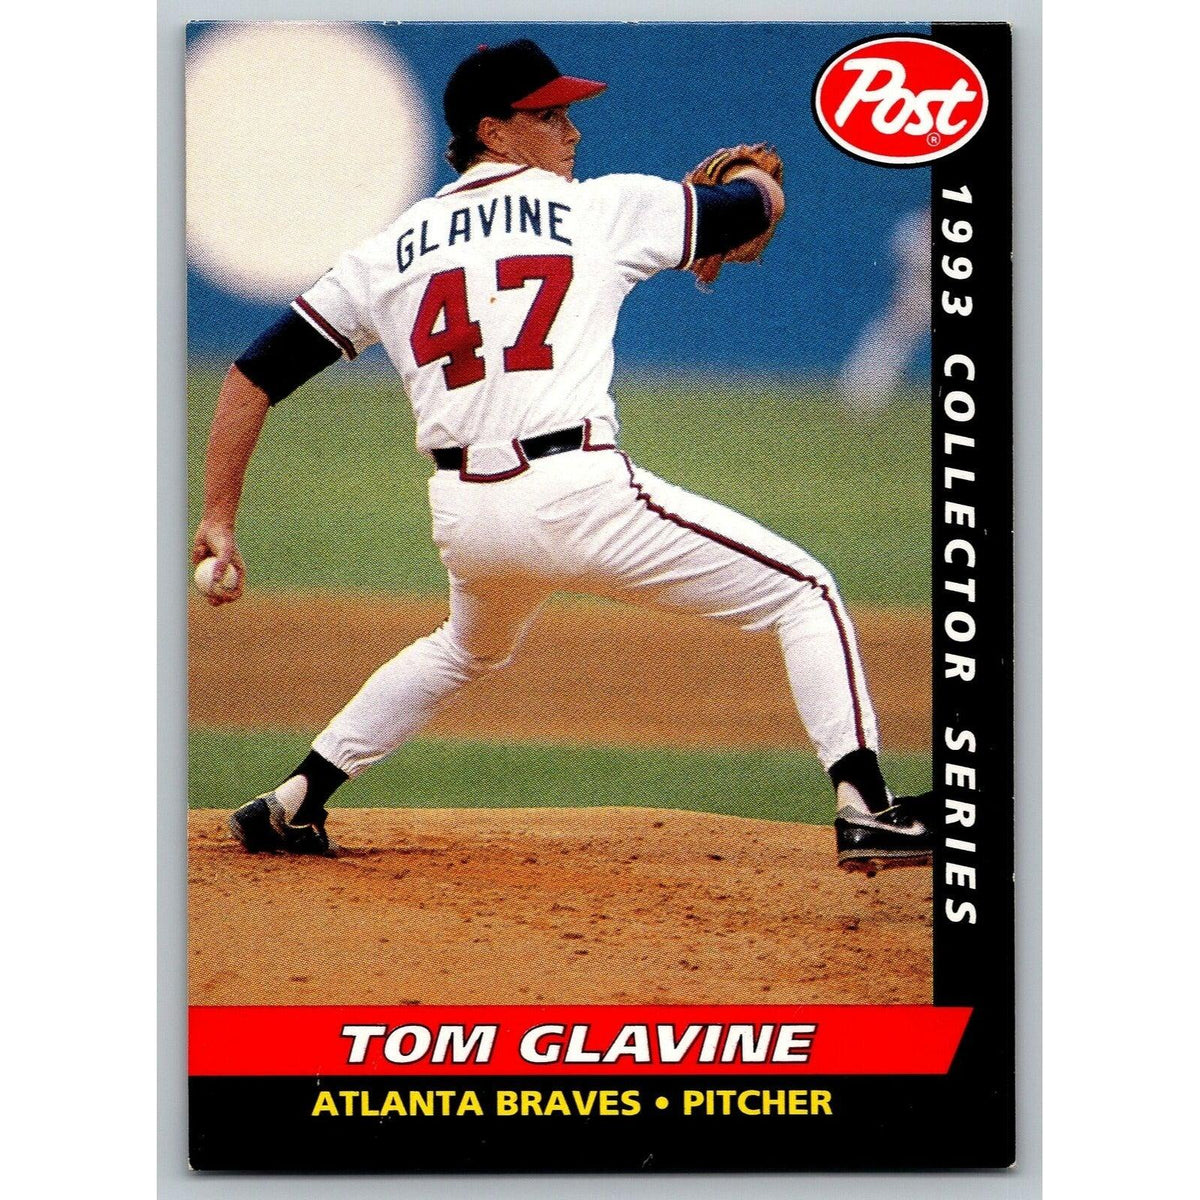 Tom Glavine - Atlanta Braves Pitcher